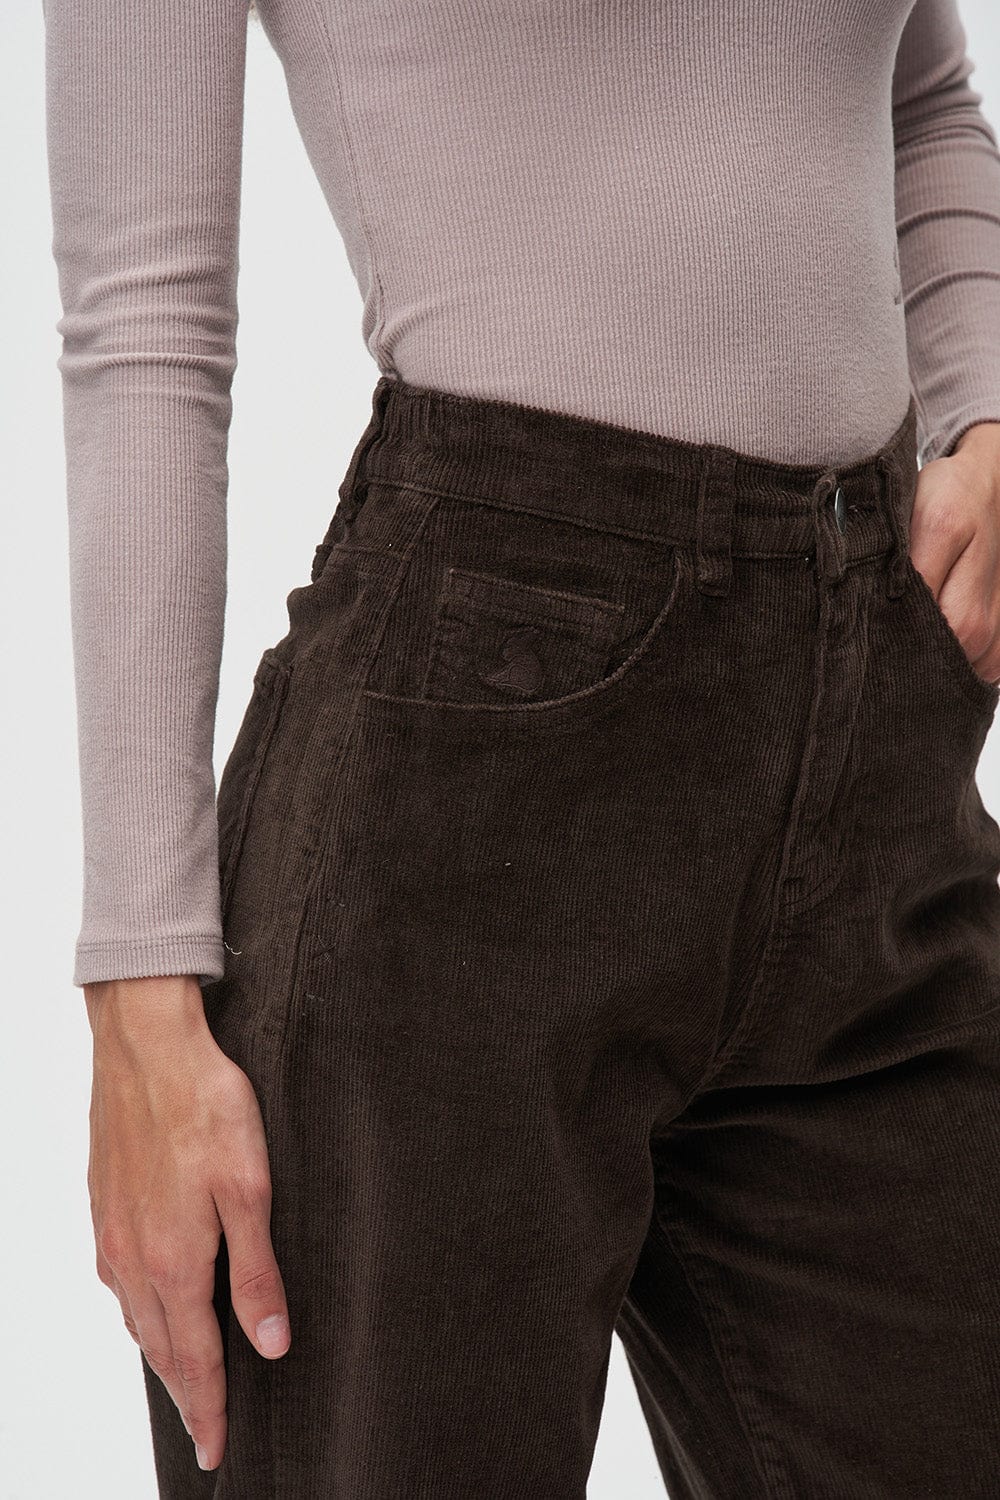 KUWALLATEE Men's Corduroy Pant  Below The Belt – Below The Belt Store